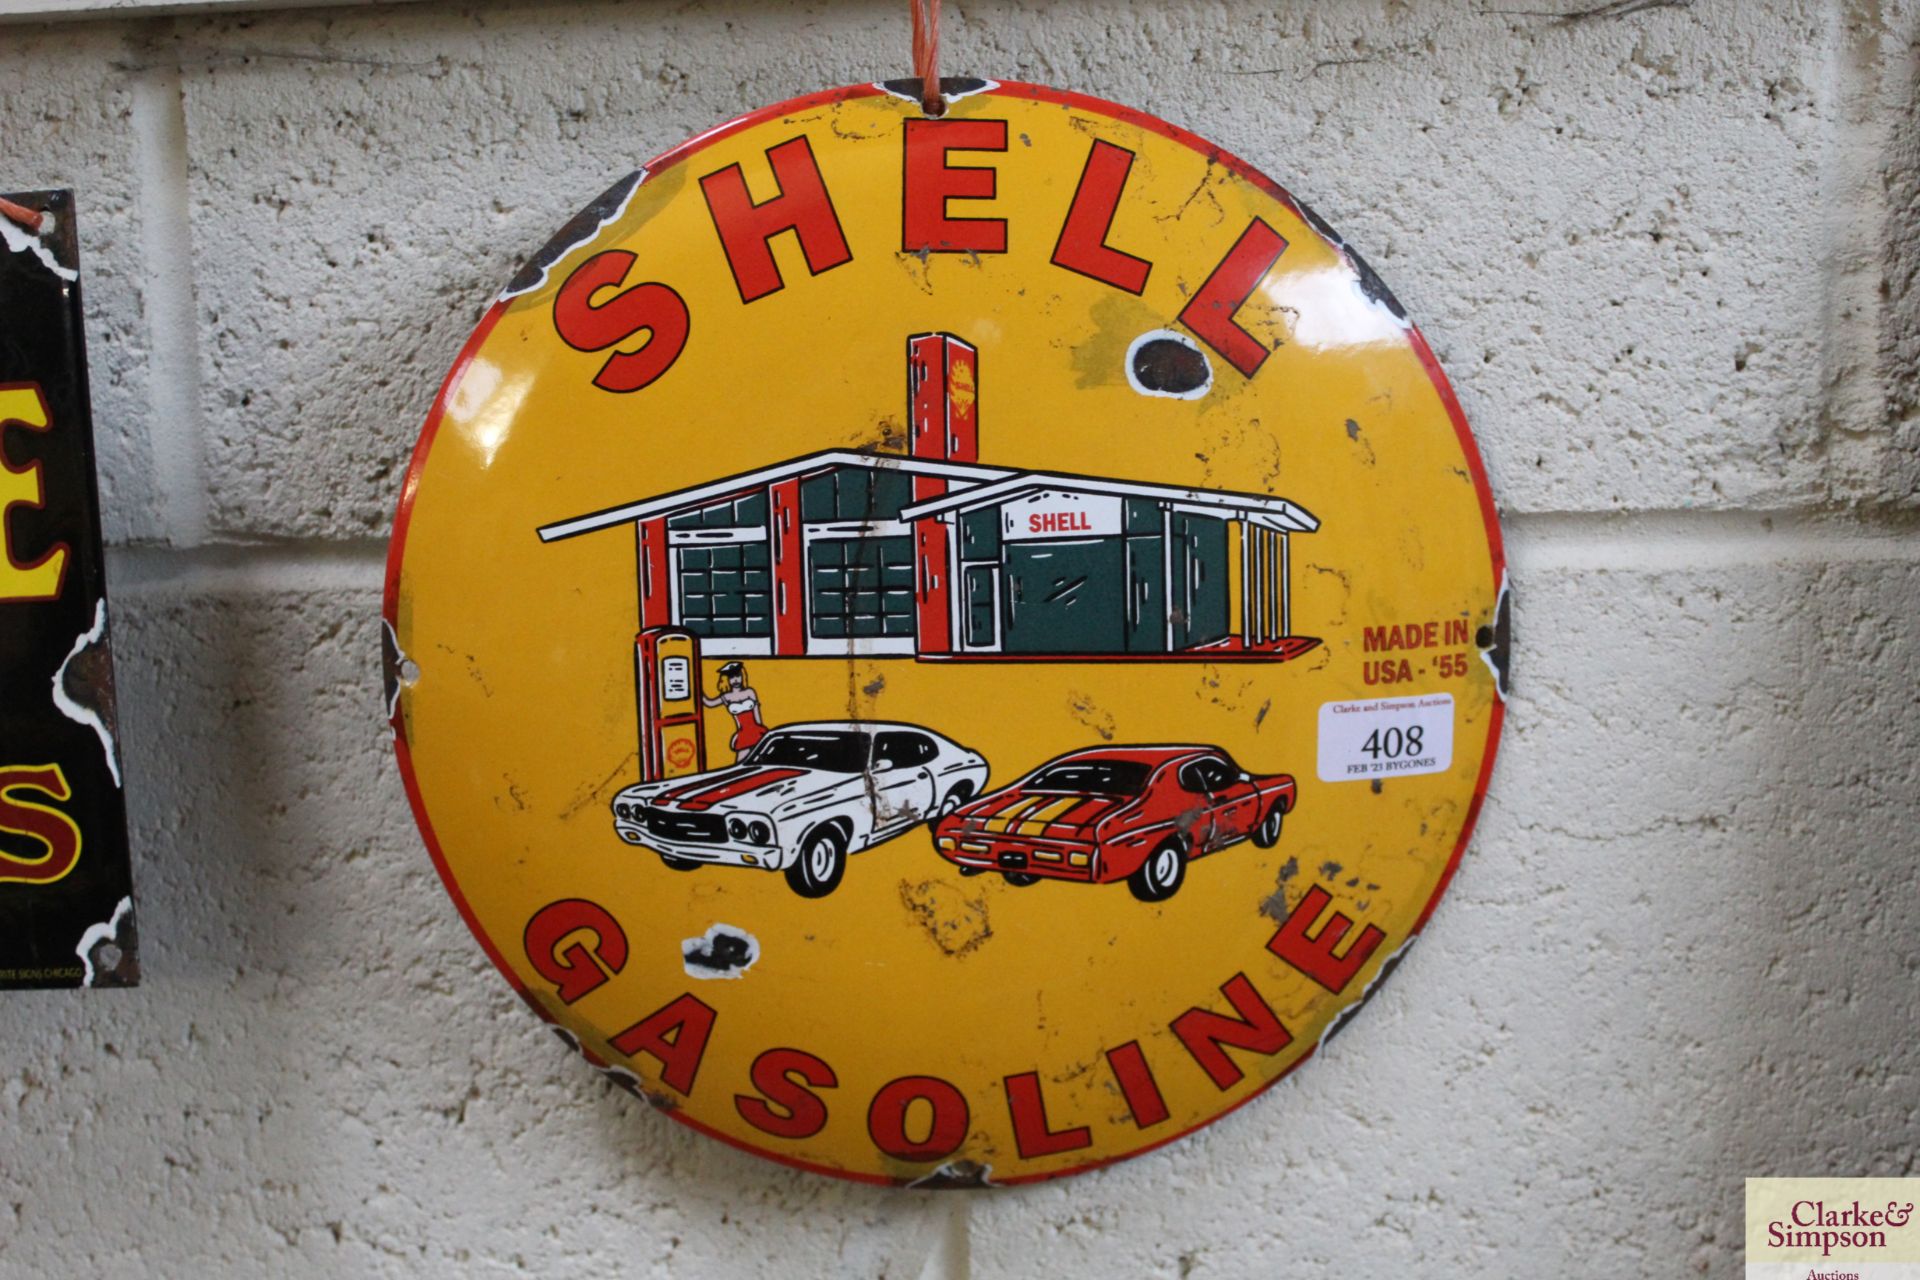 A reproduction "Shell Gasoline" circular enamel ad